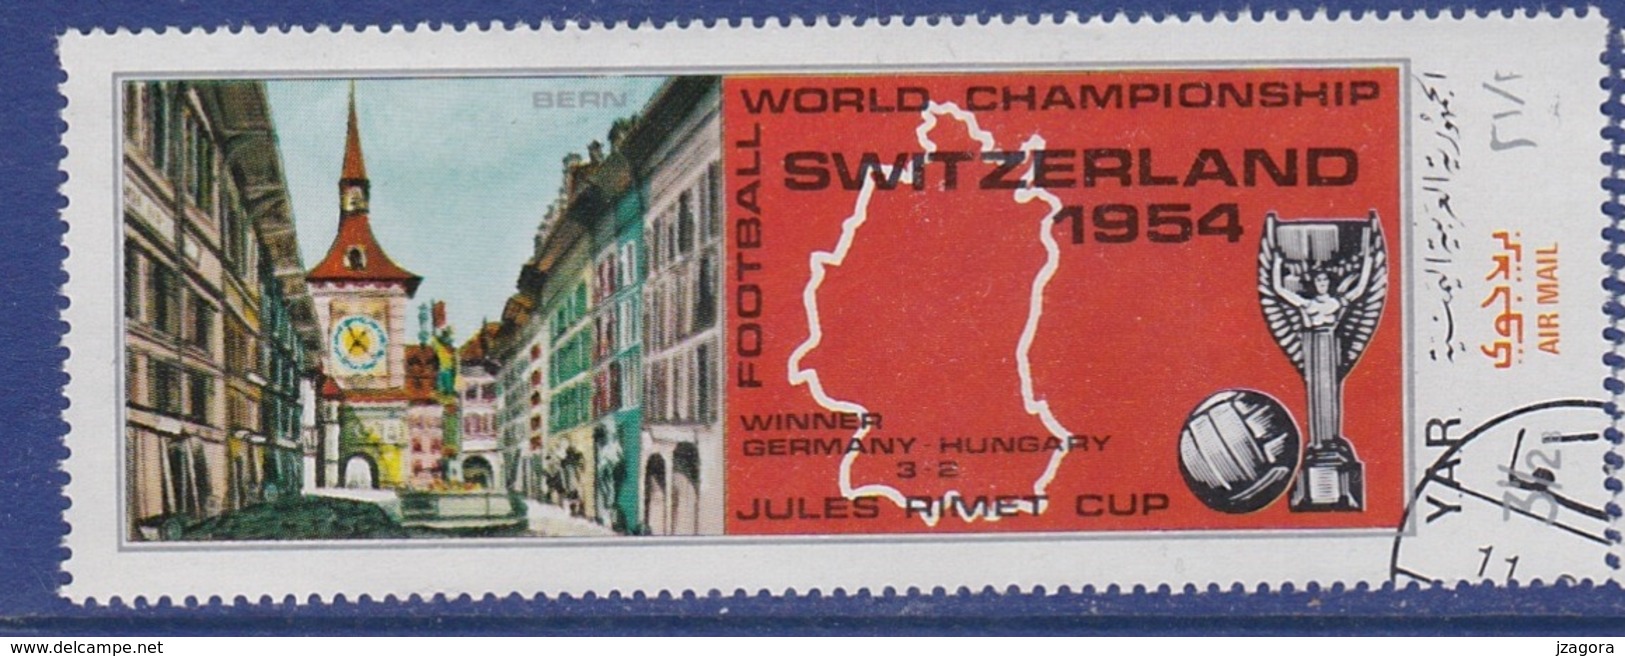 SOCCER FOOTBALL WORLD CHAMPIONSHIP MUNDIAL SWITZERLAND 1954 - YAR YEMEN - 1954 – Suisse